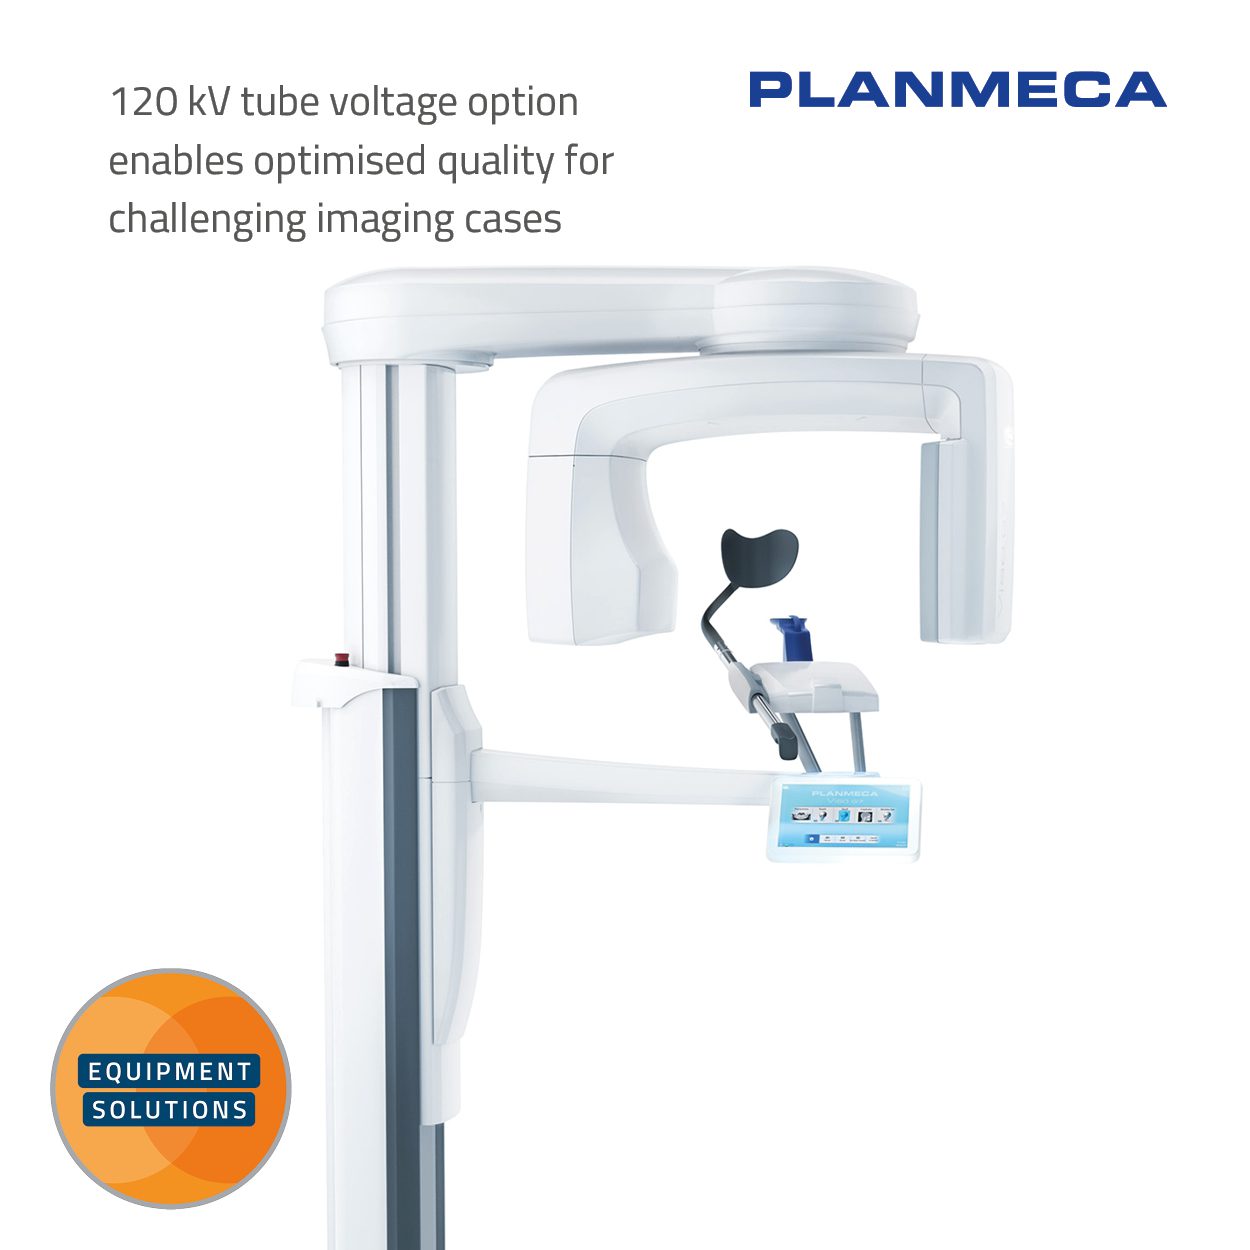 Planmeca Viso G7 is their top of the range 3D digital imaging system